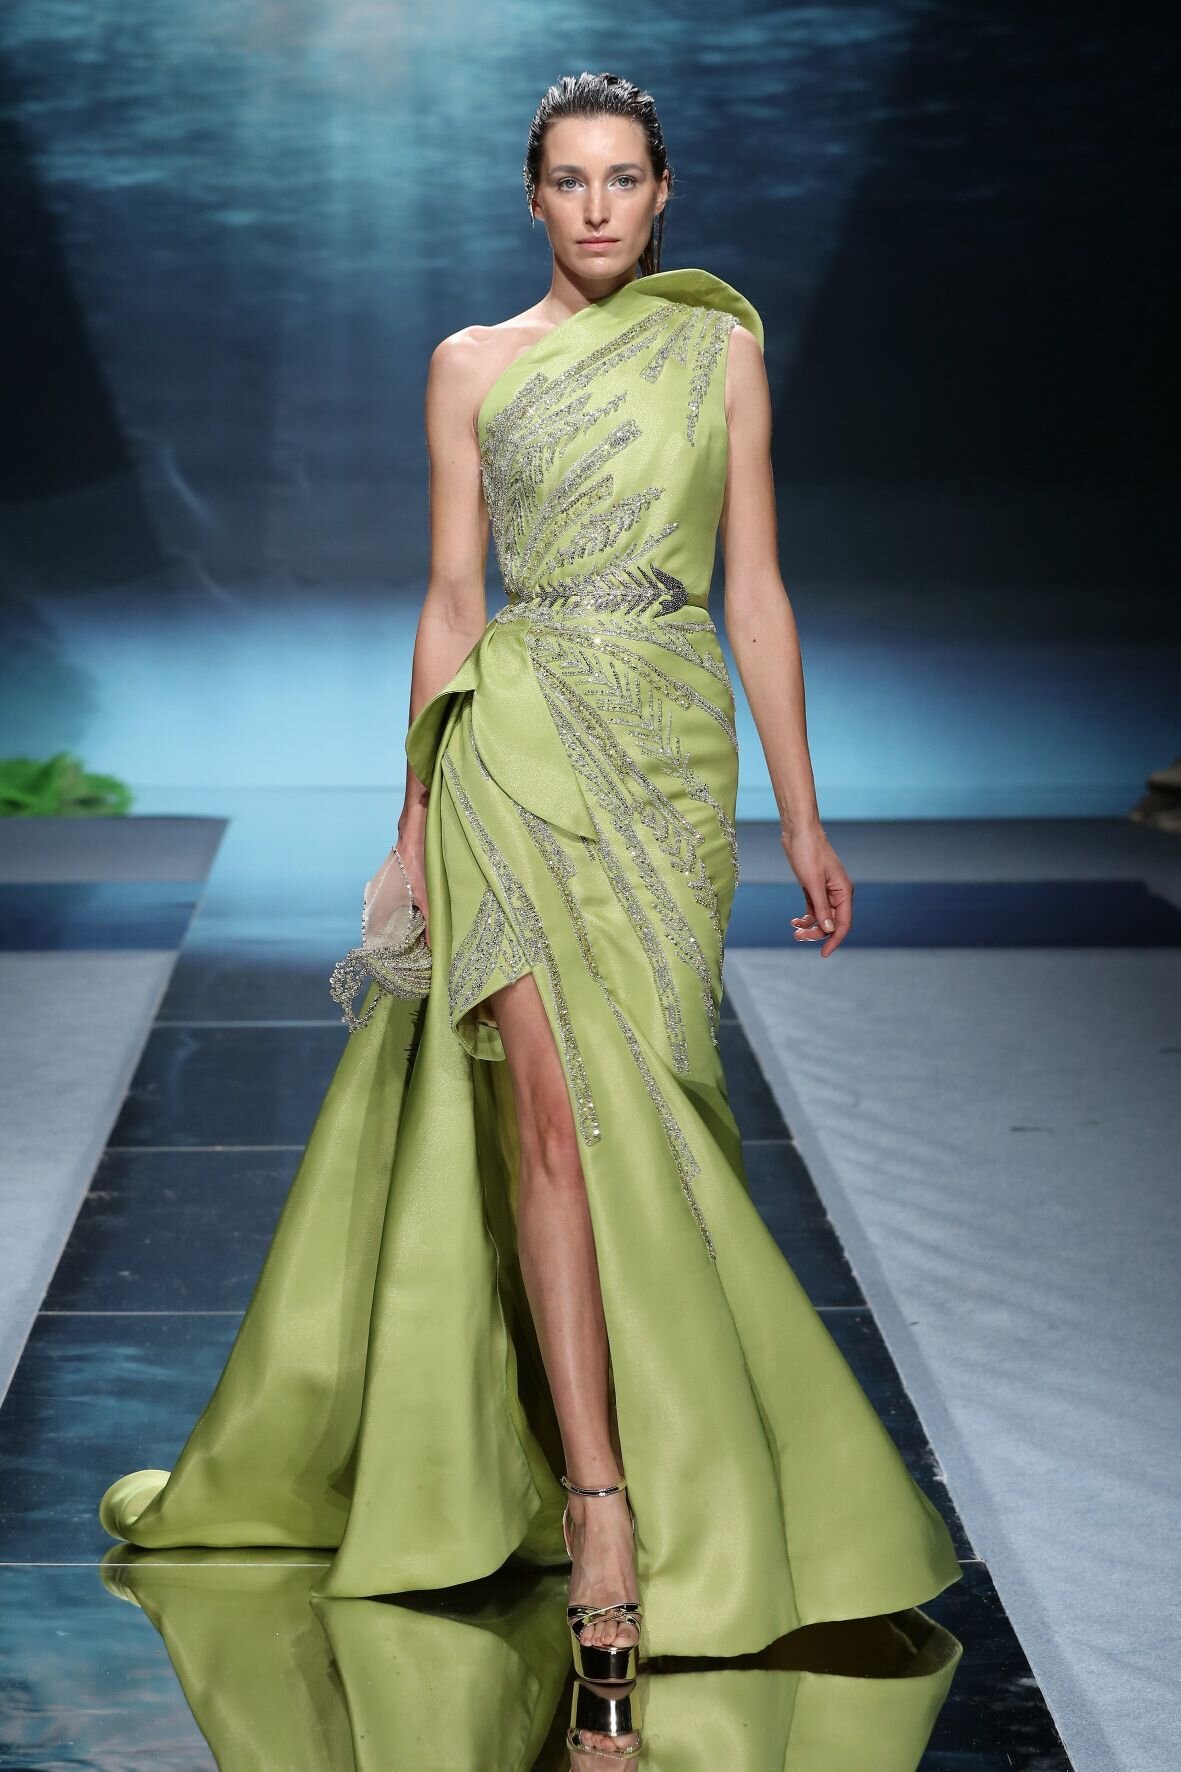 Spring 2020 Haute Couture: Ziad Nakad's Atlantis — CoutureNotebook